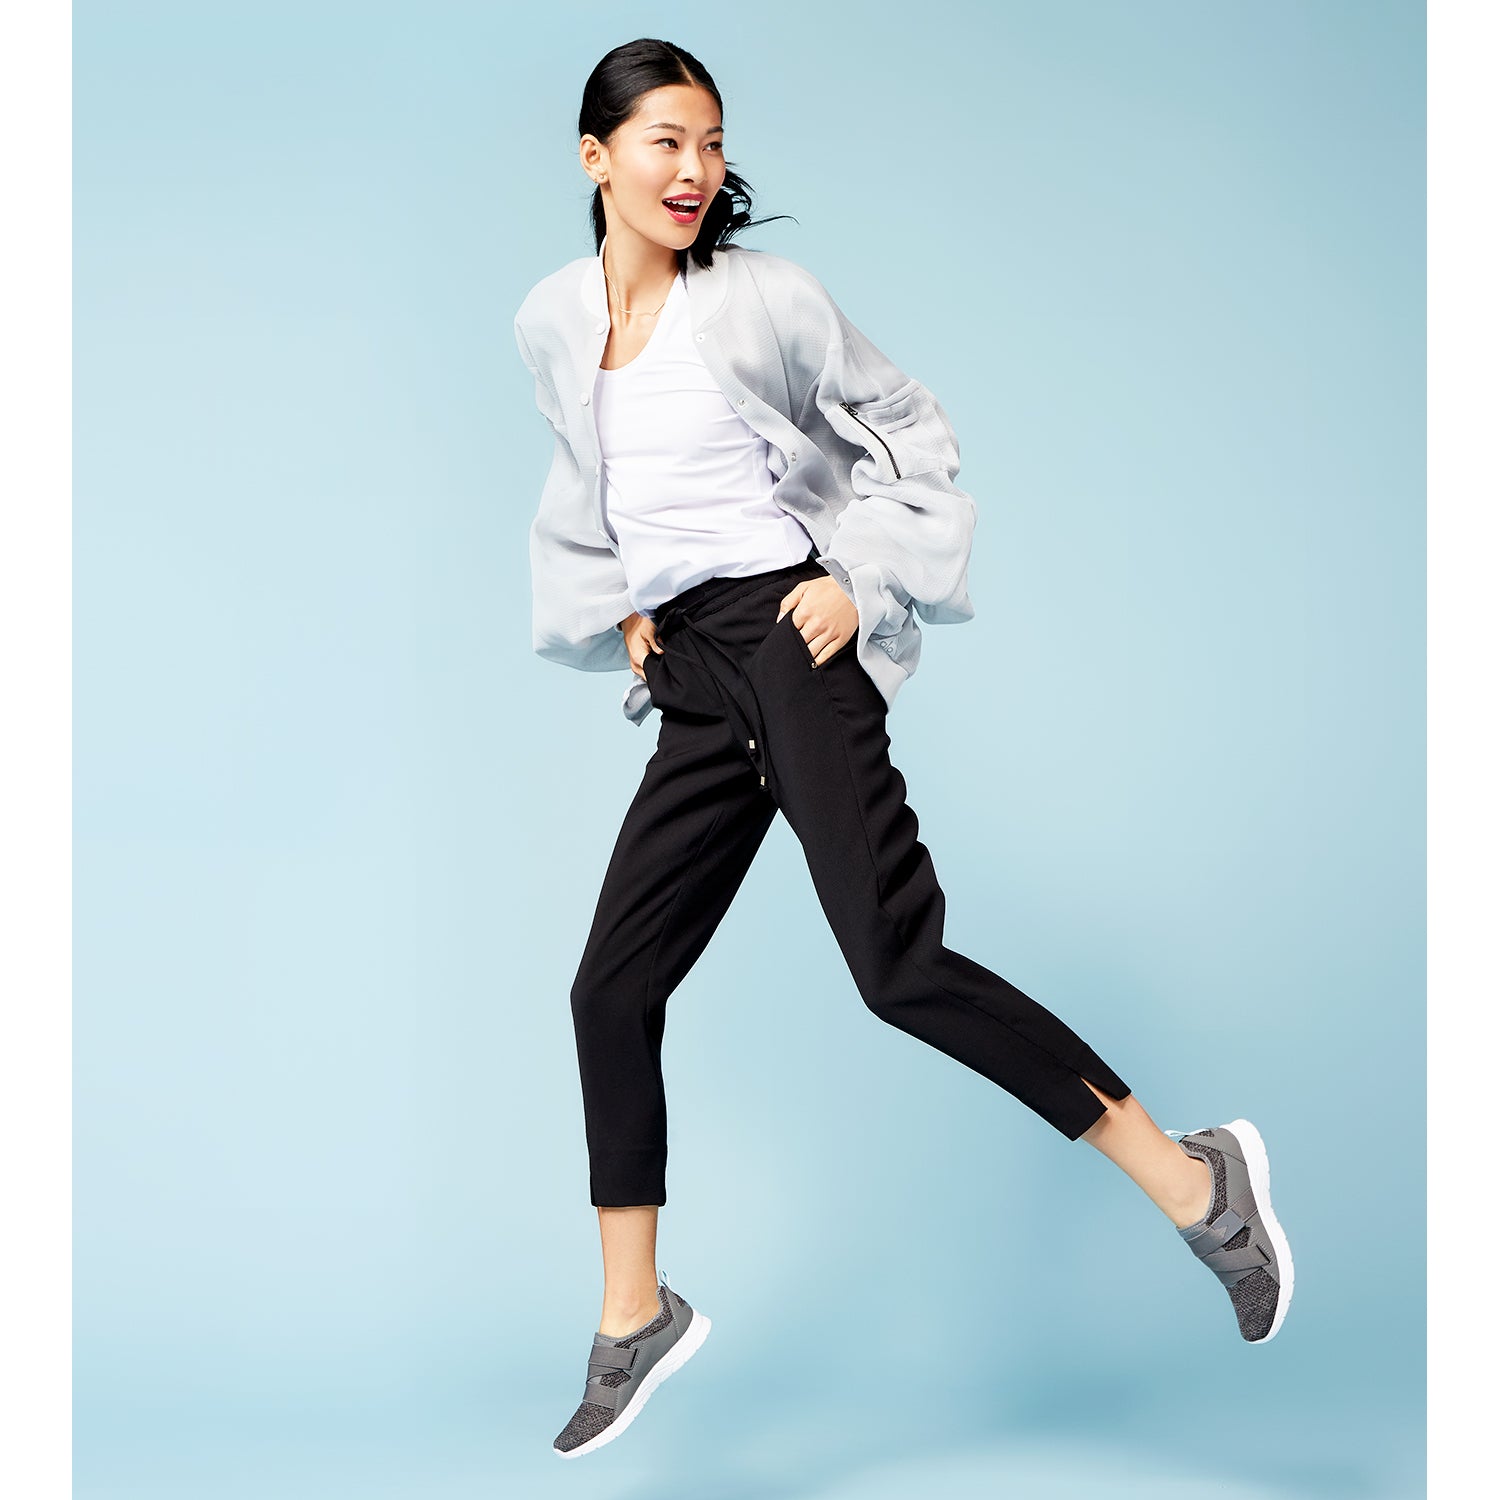 Vionic Aimmy White | Women's Active Slip-On Sneakers | Footwear etc.